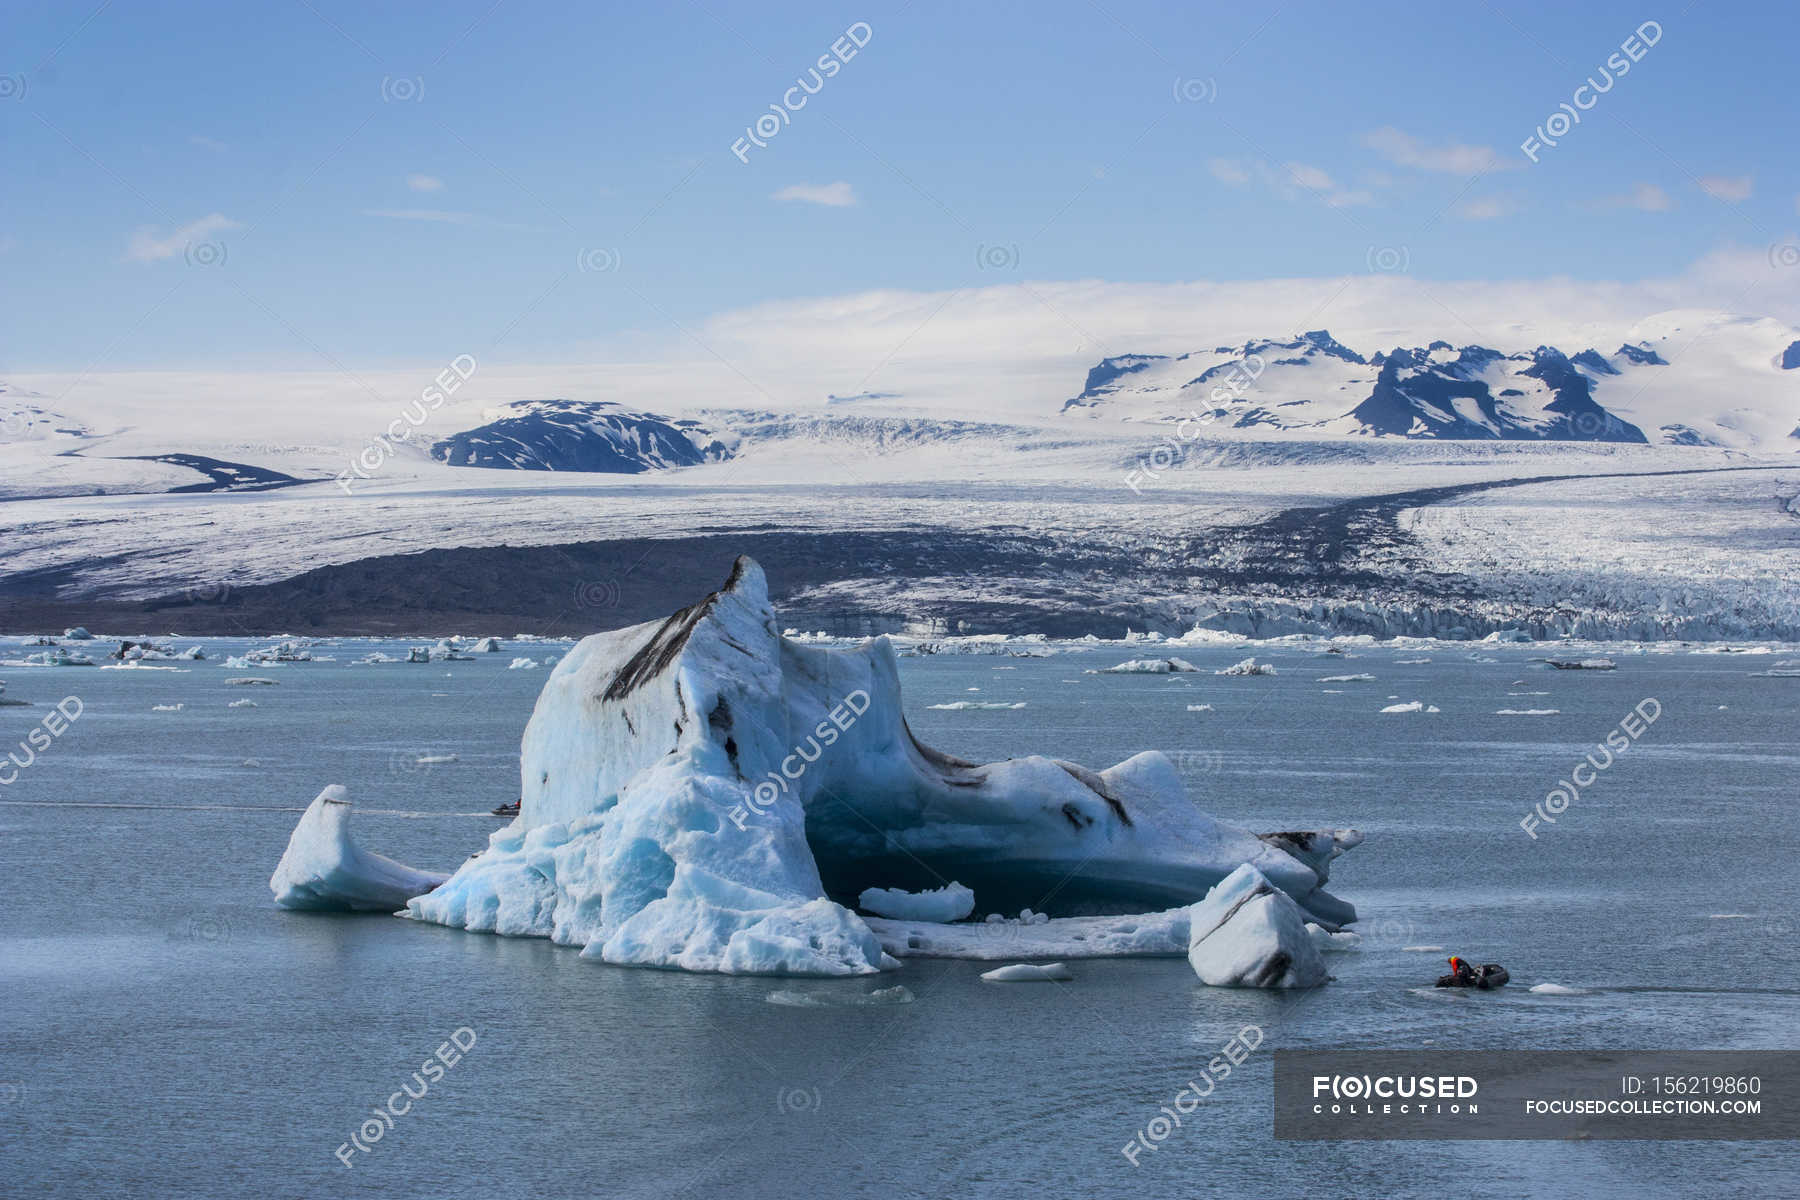 Jokulsarlon glacier during daytime — Stock Photo | #156219860